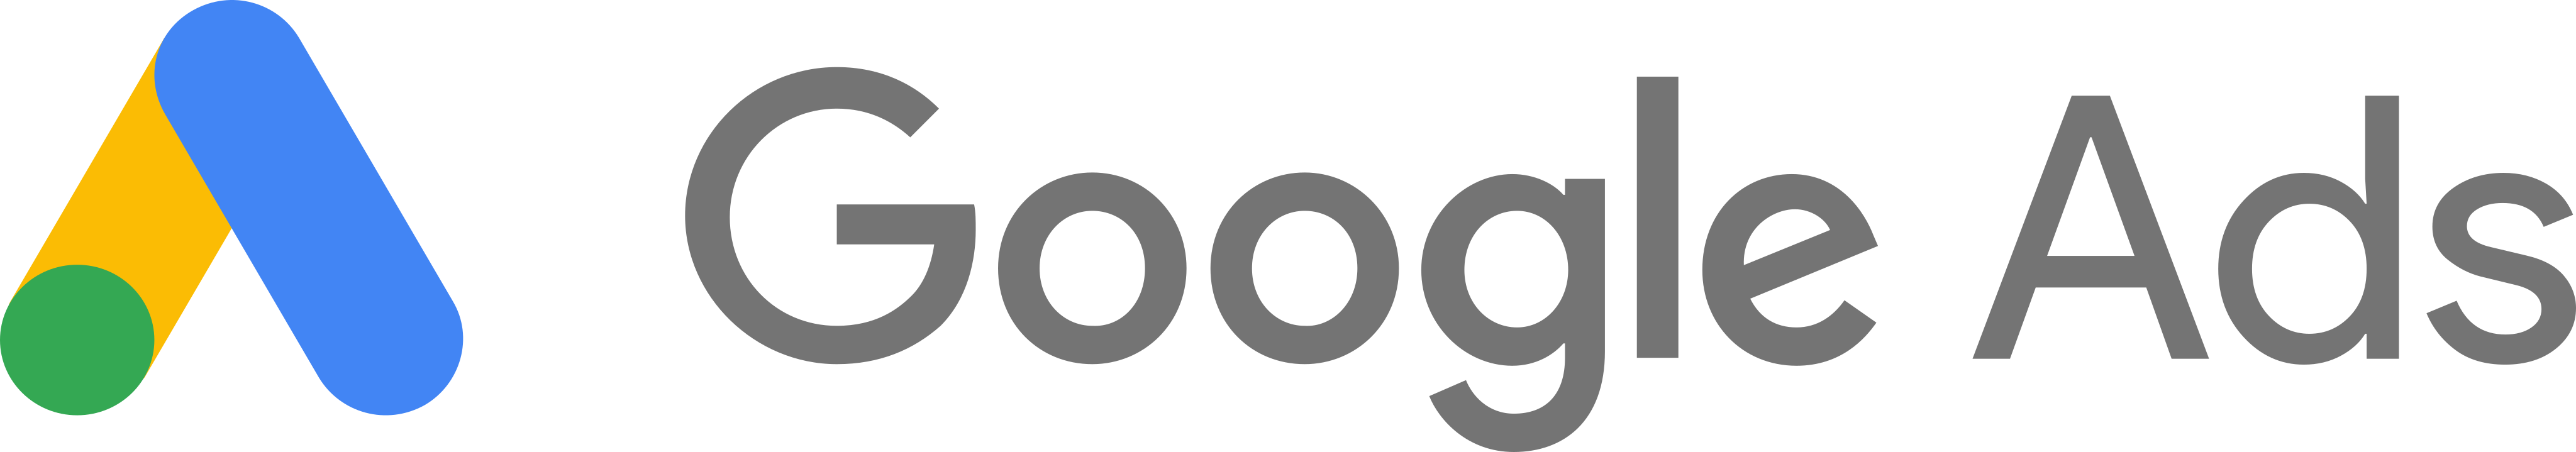 Google Ads Logo.